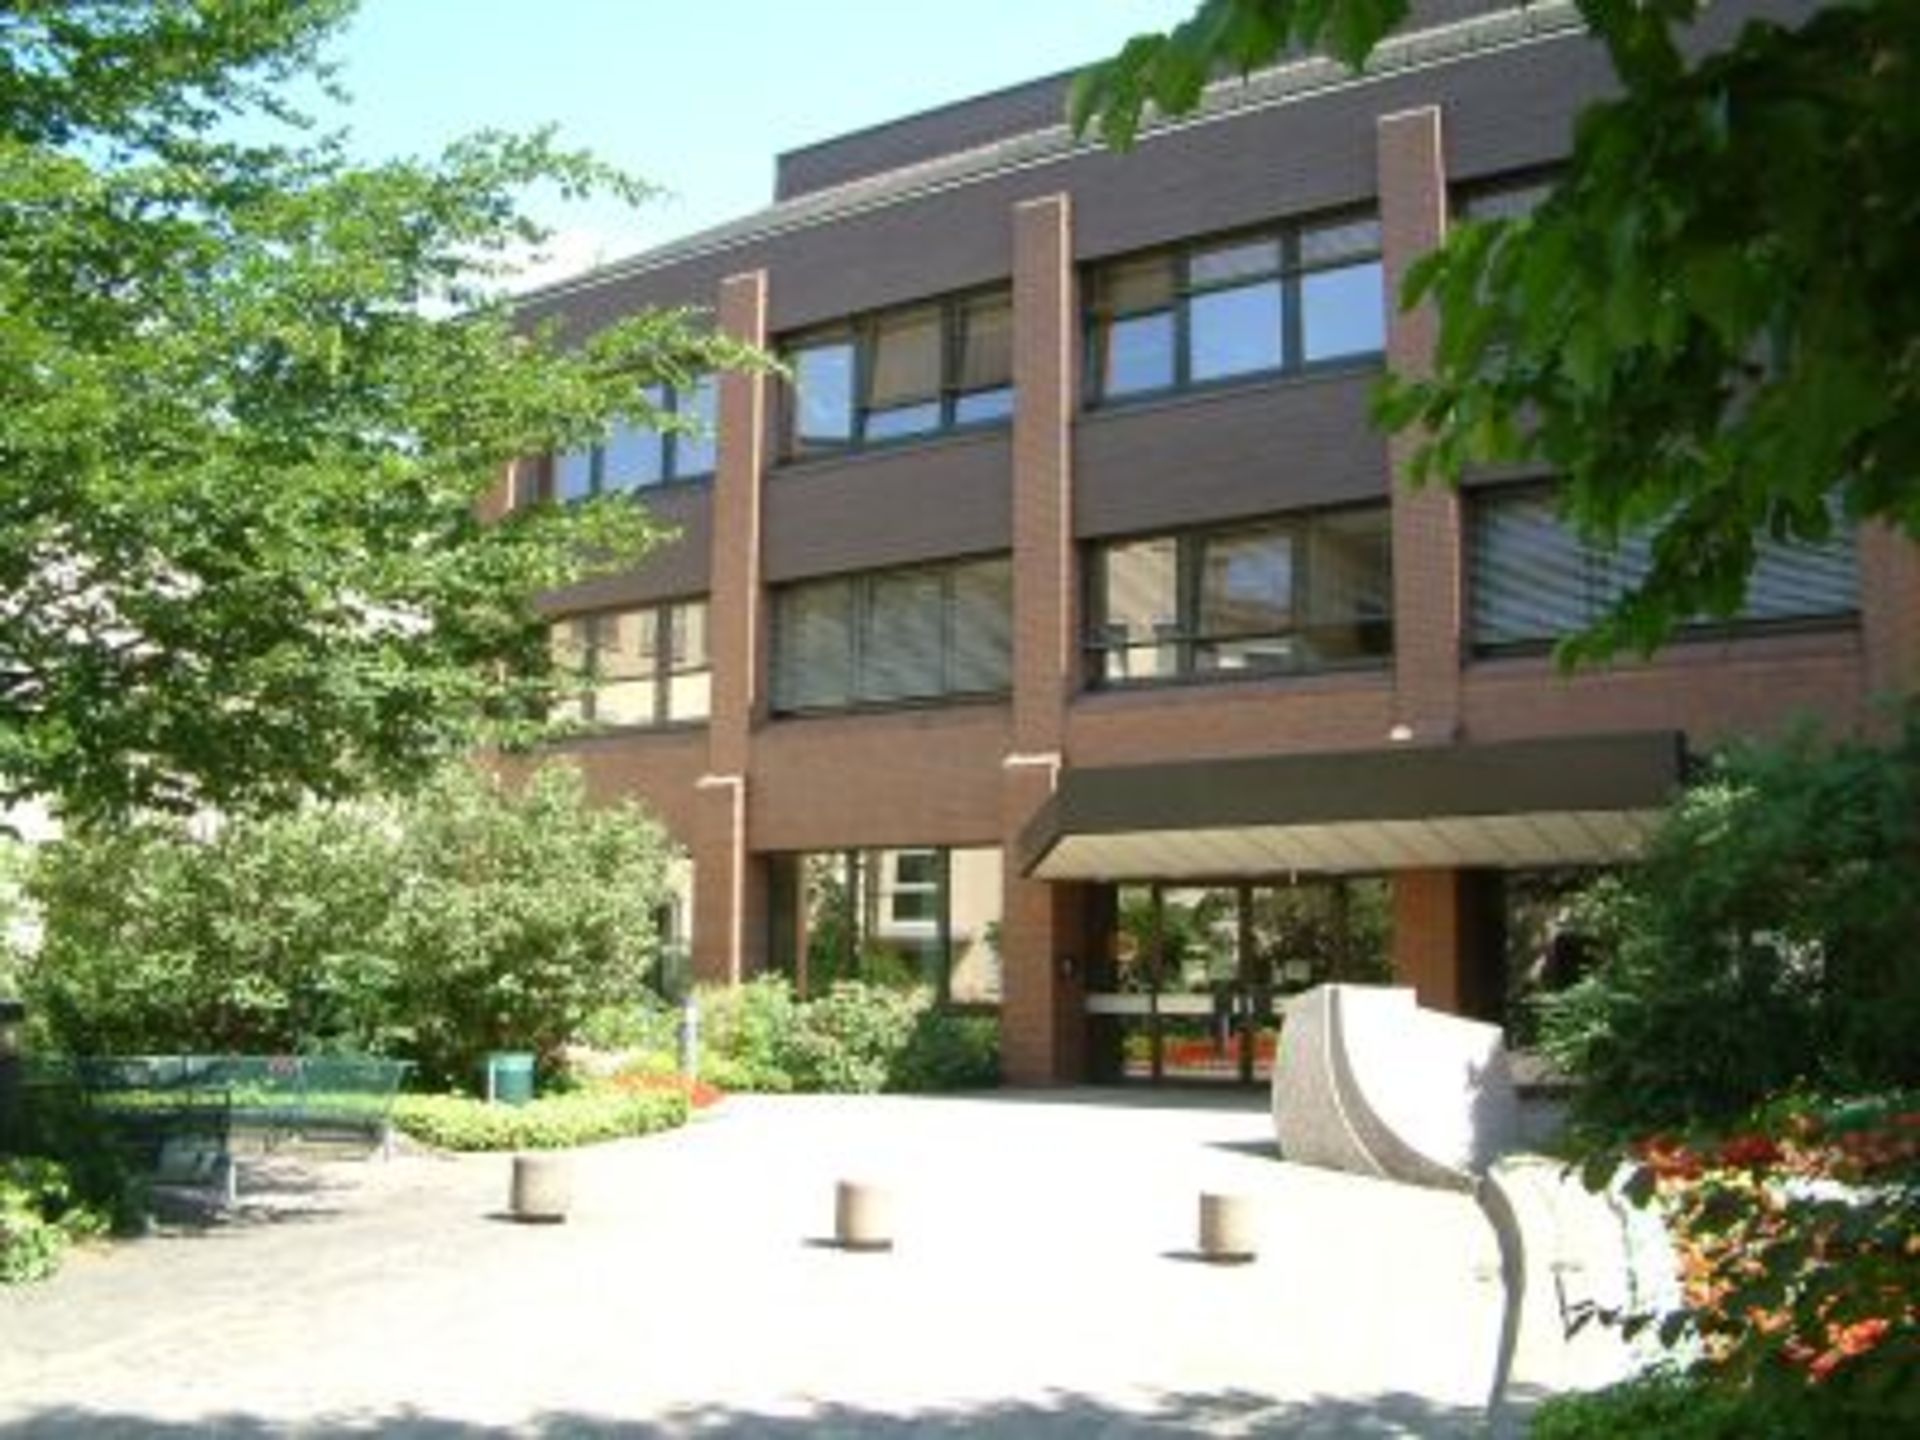 Zentrales Mahngericht Stuttgart